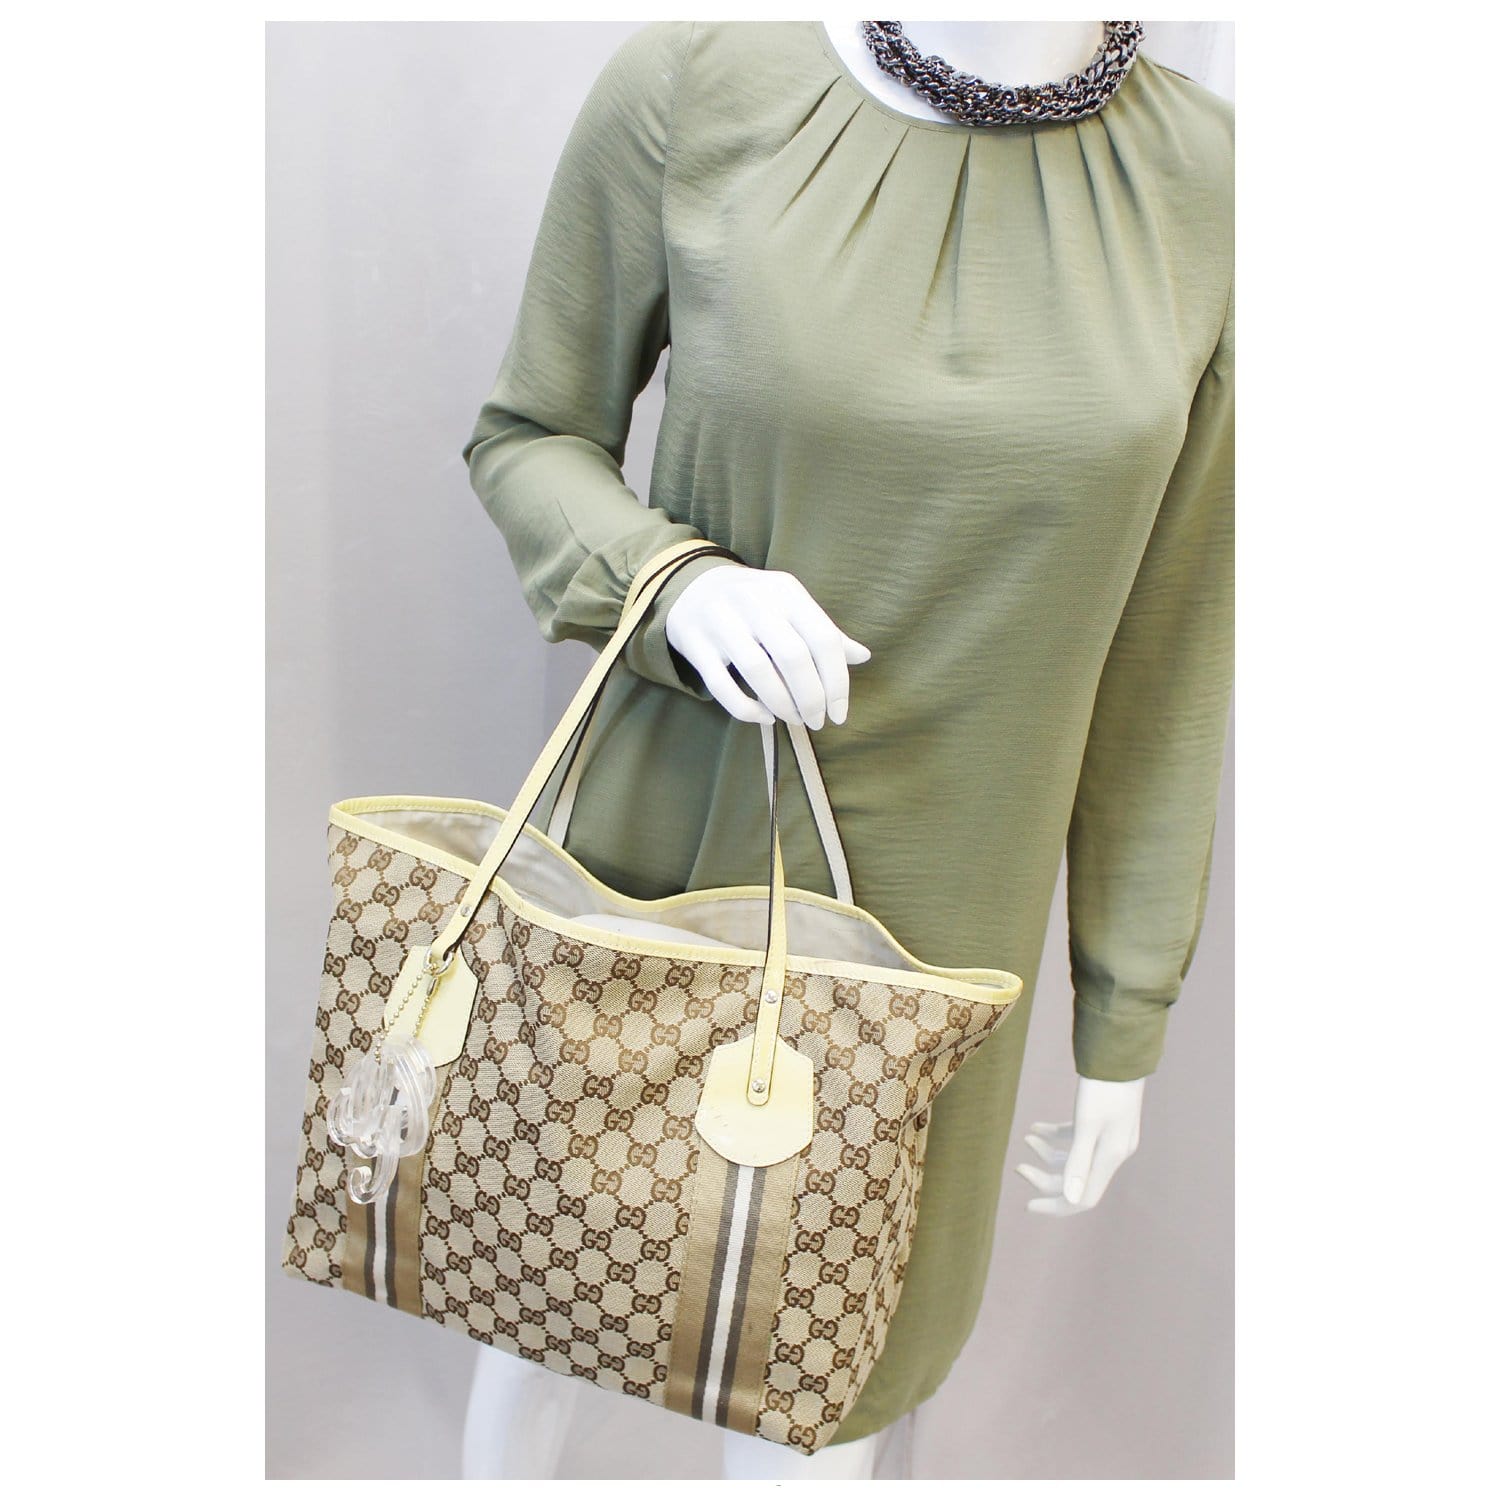 90s Authentic Vintage Bag Gucci/White Beige Bag leather/Gucci Monogram bag/Gucci Design Tote bag/Gucci Monogram Bag